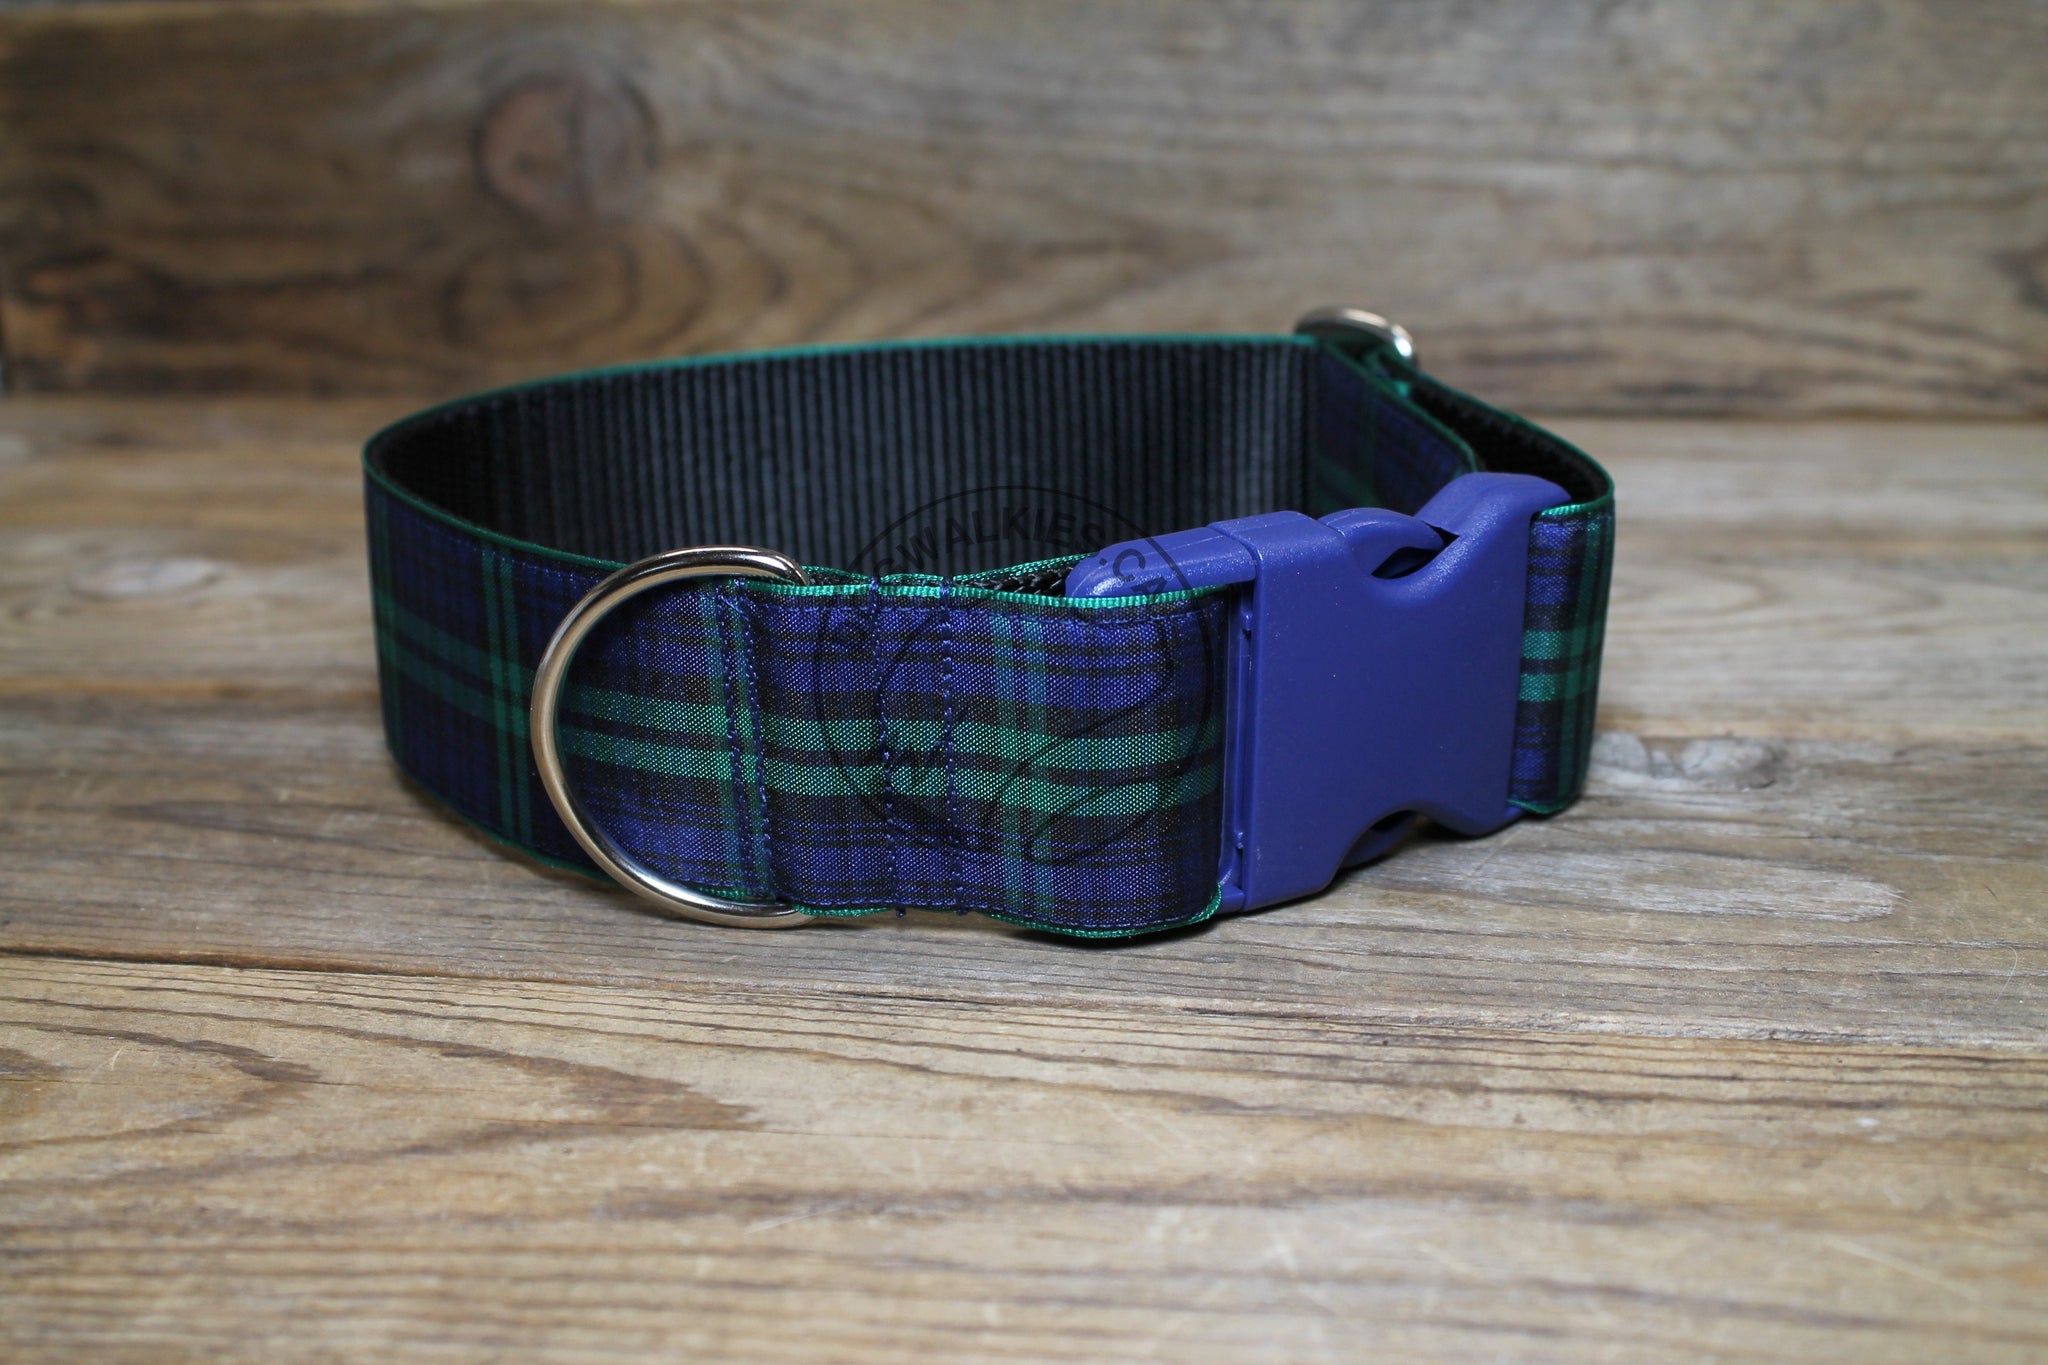 Blackwatch green edge clan tartan - dog collar